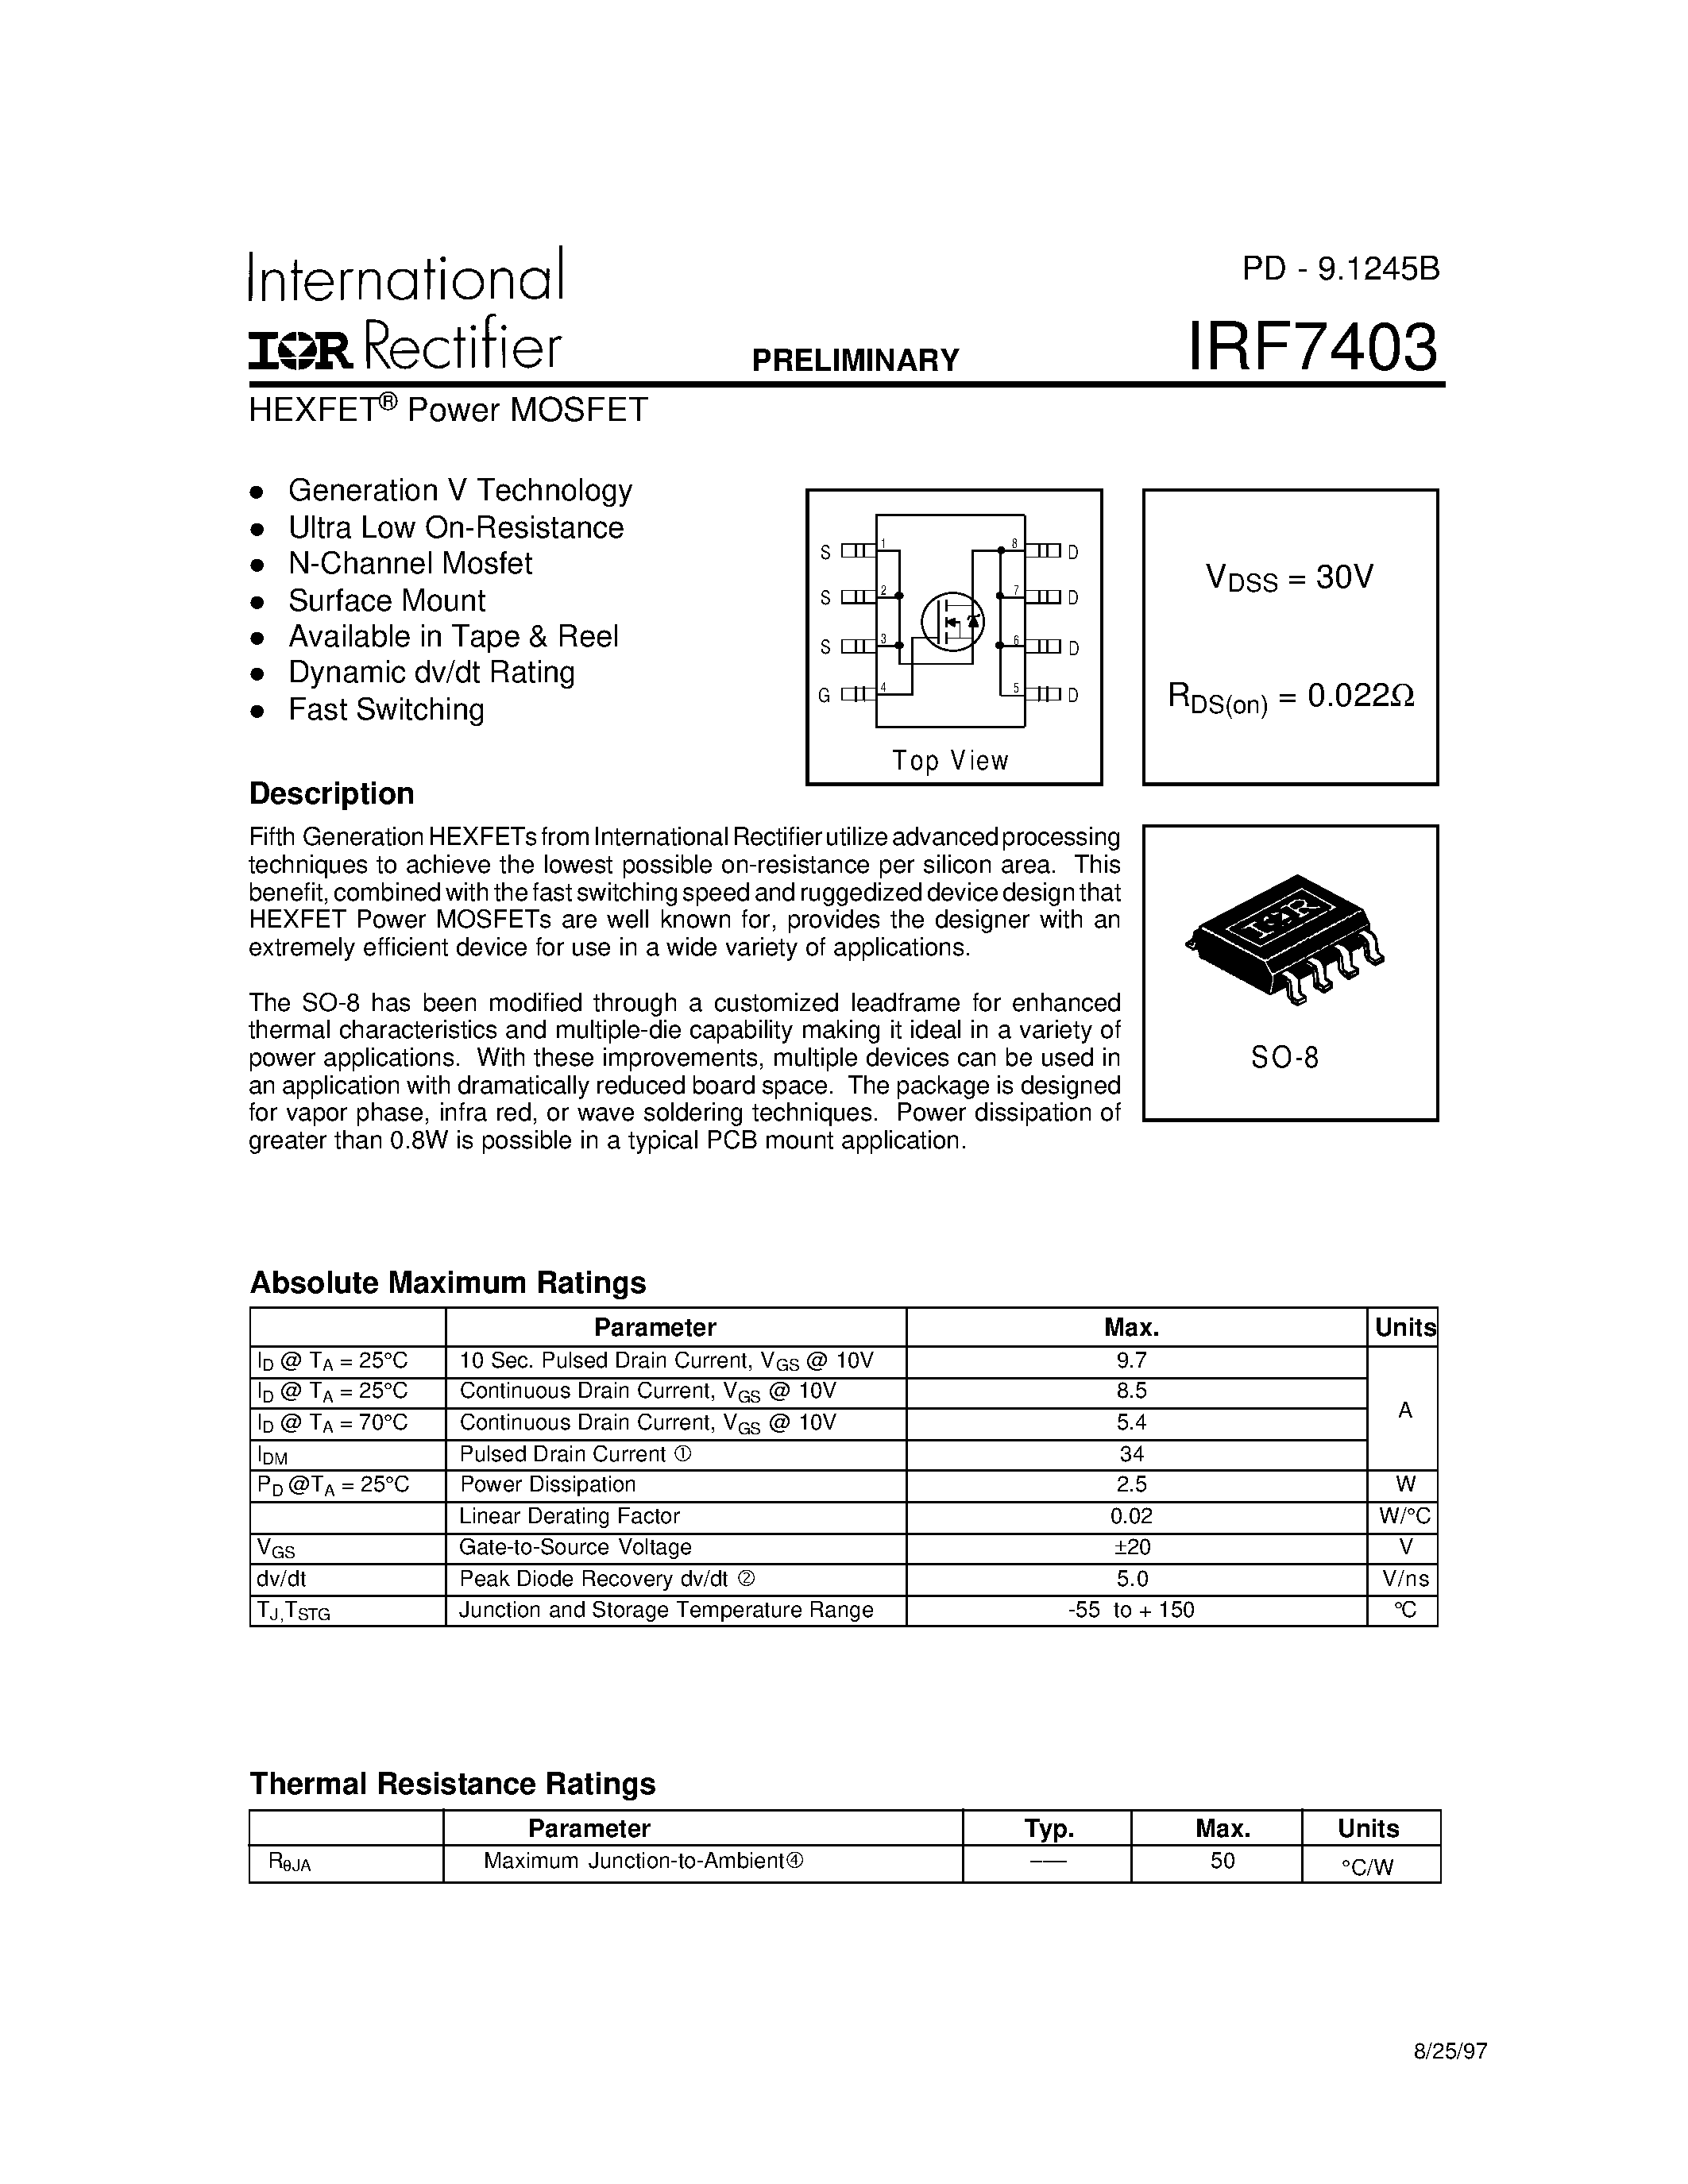 Даташит IRF7403 - Power MOSFET страница 1